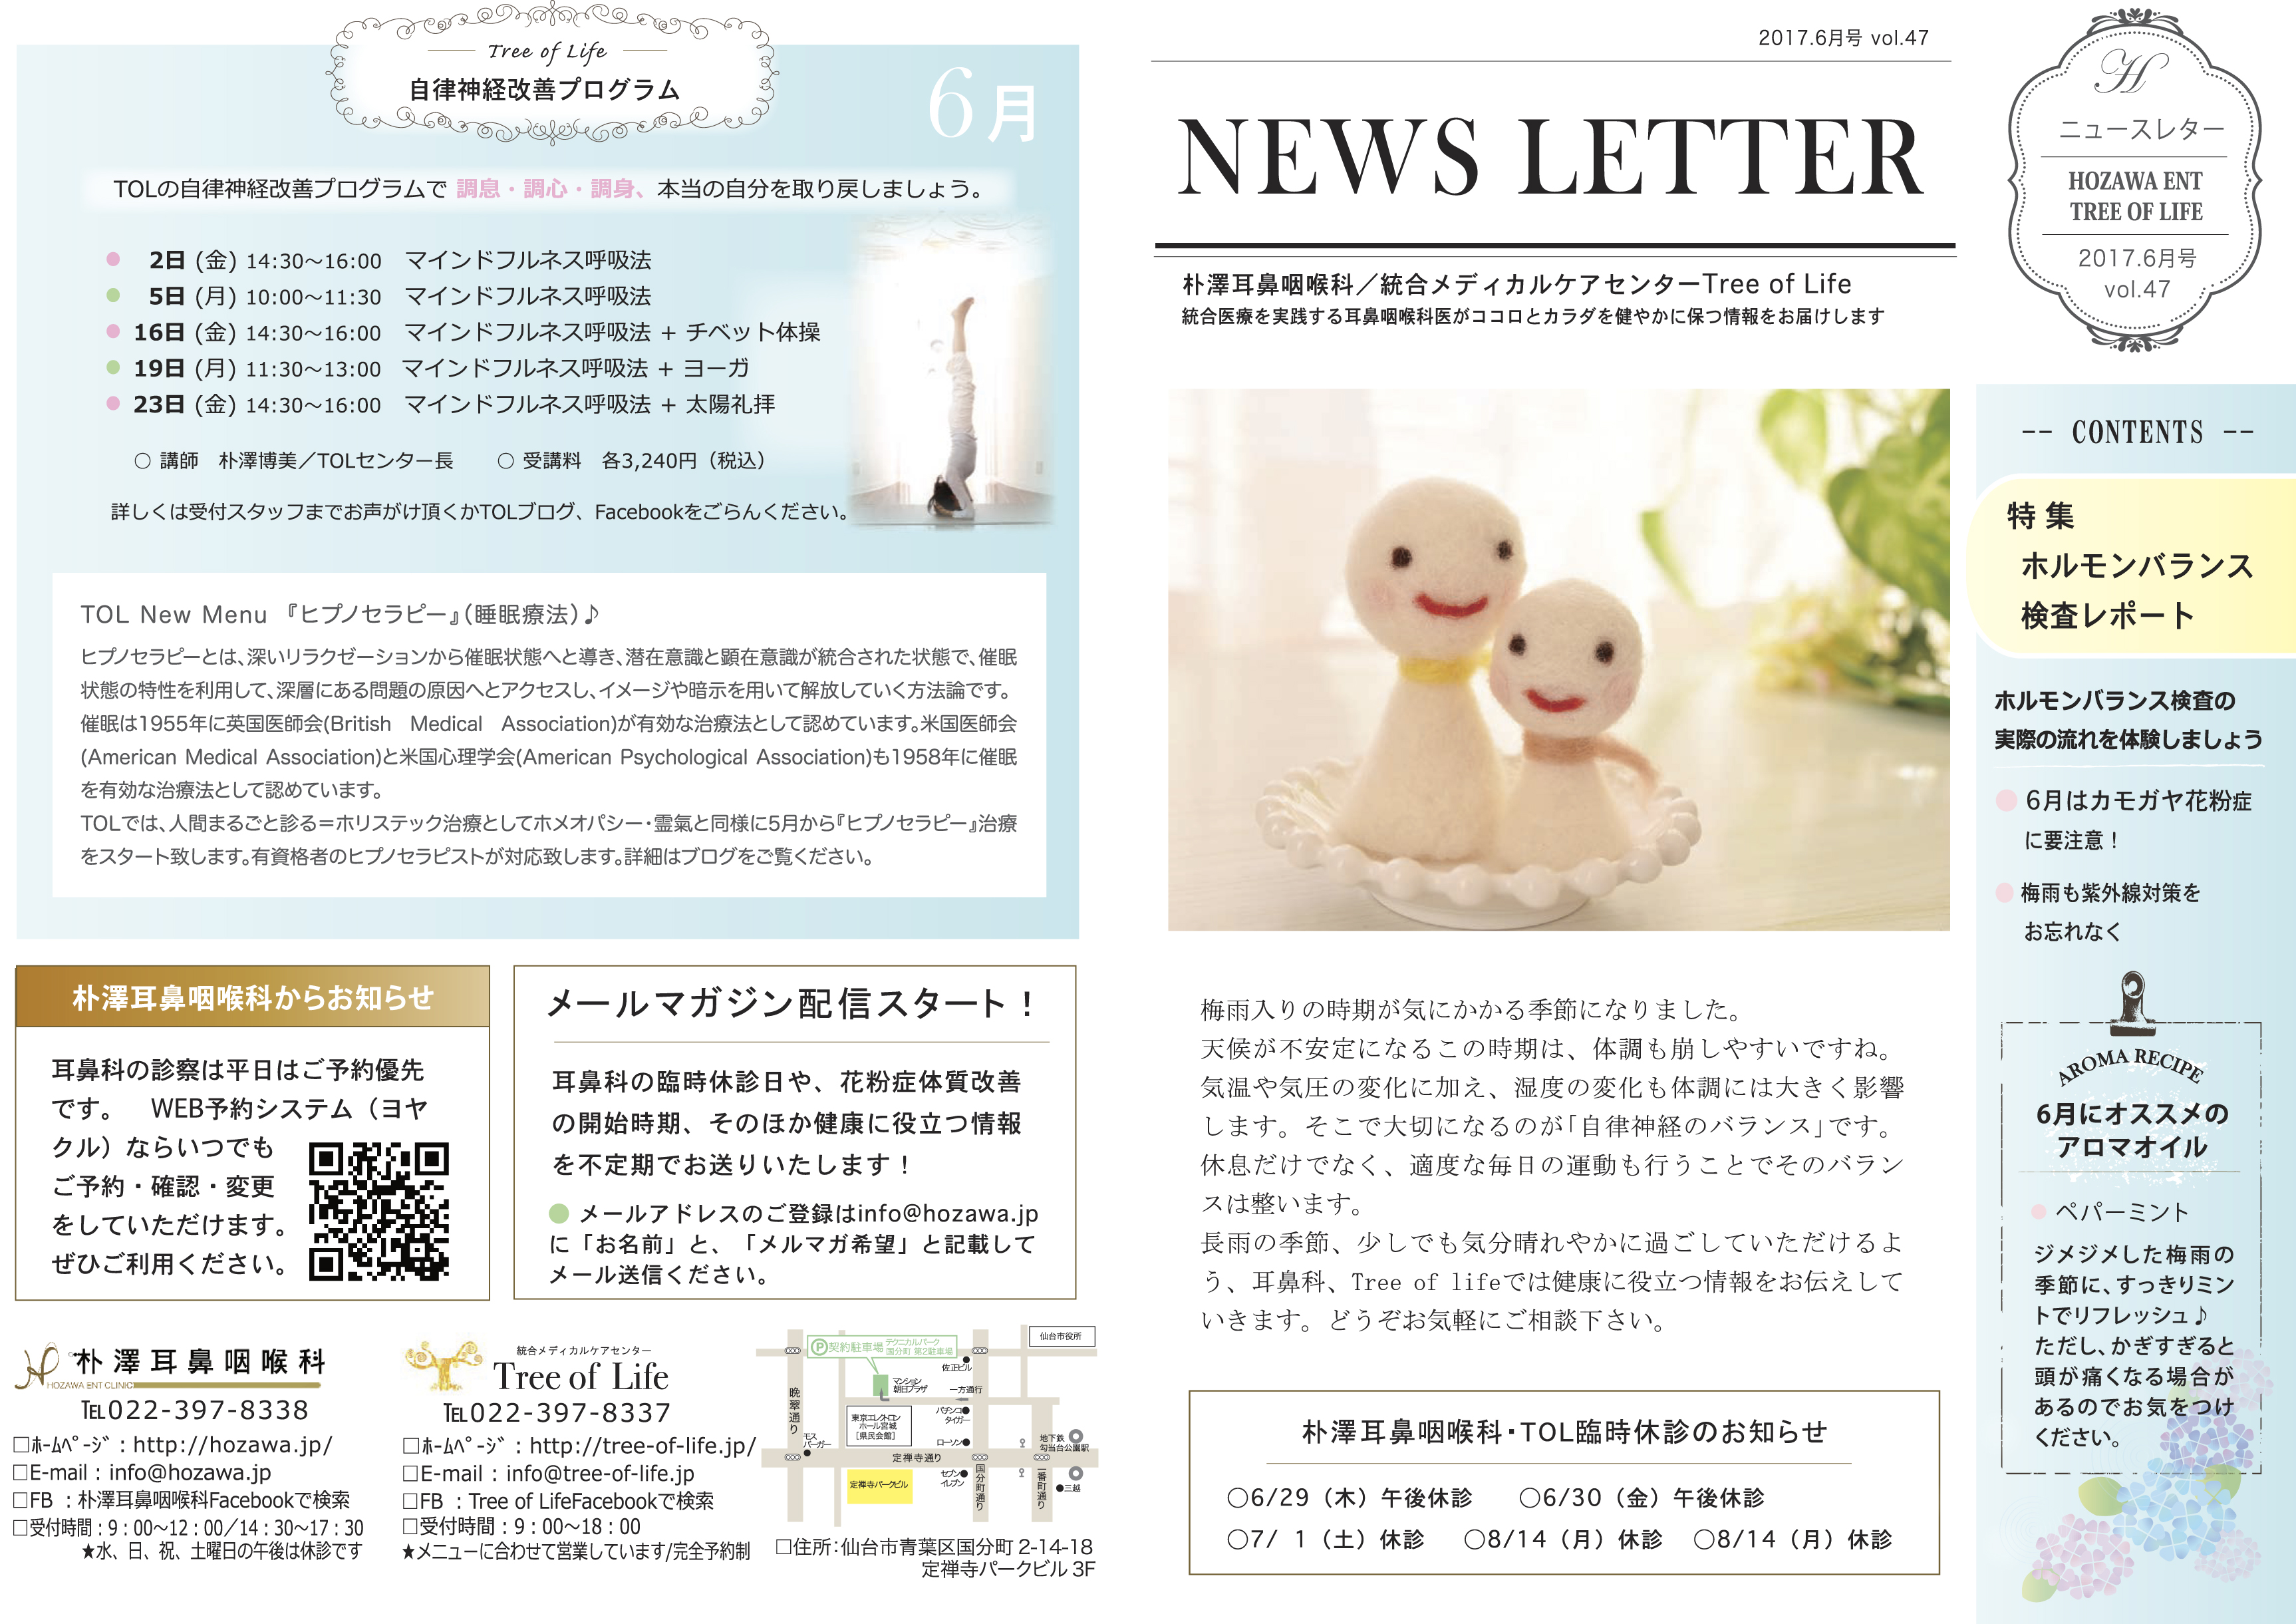 http://hozawa.jp/news/news_img/1705270961_01L-1.jpg